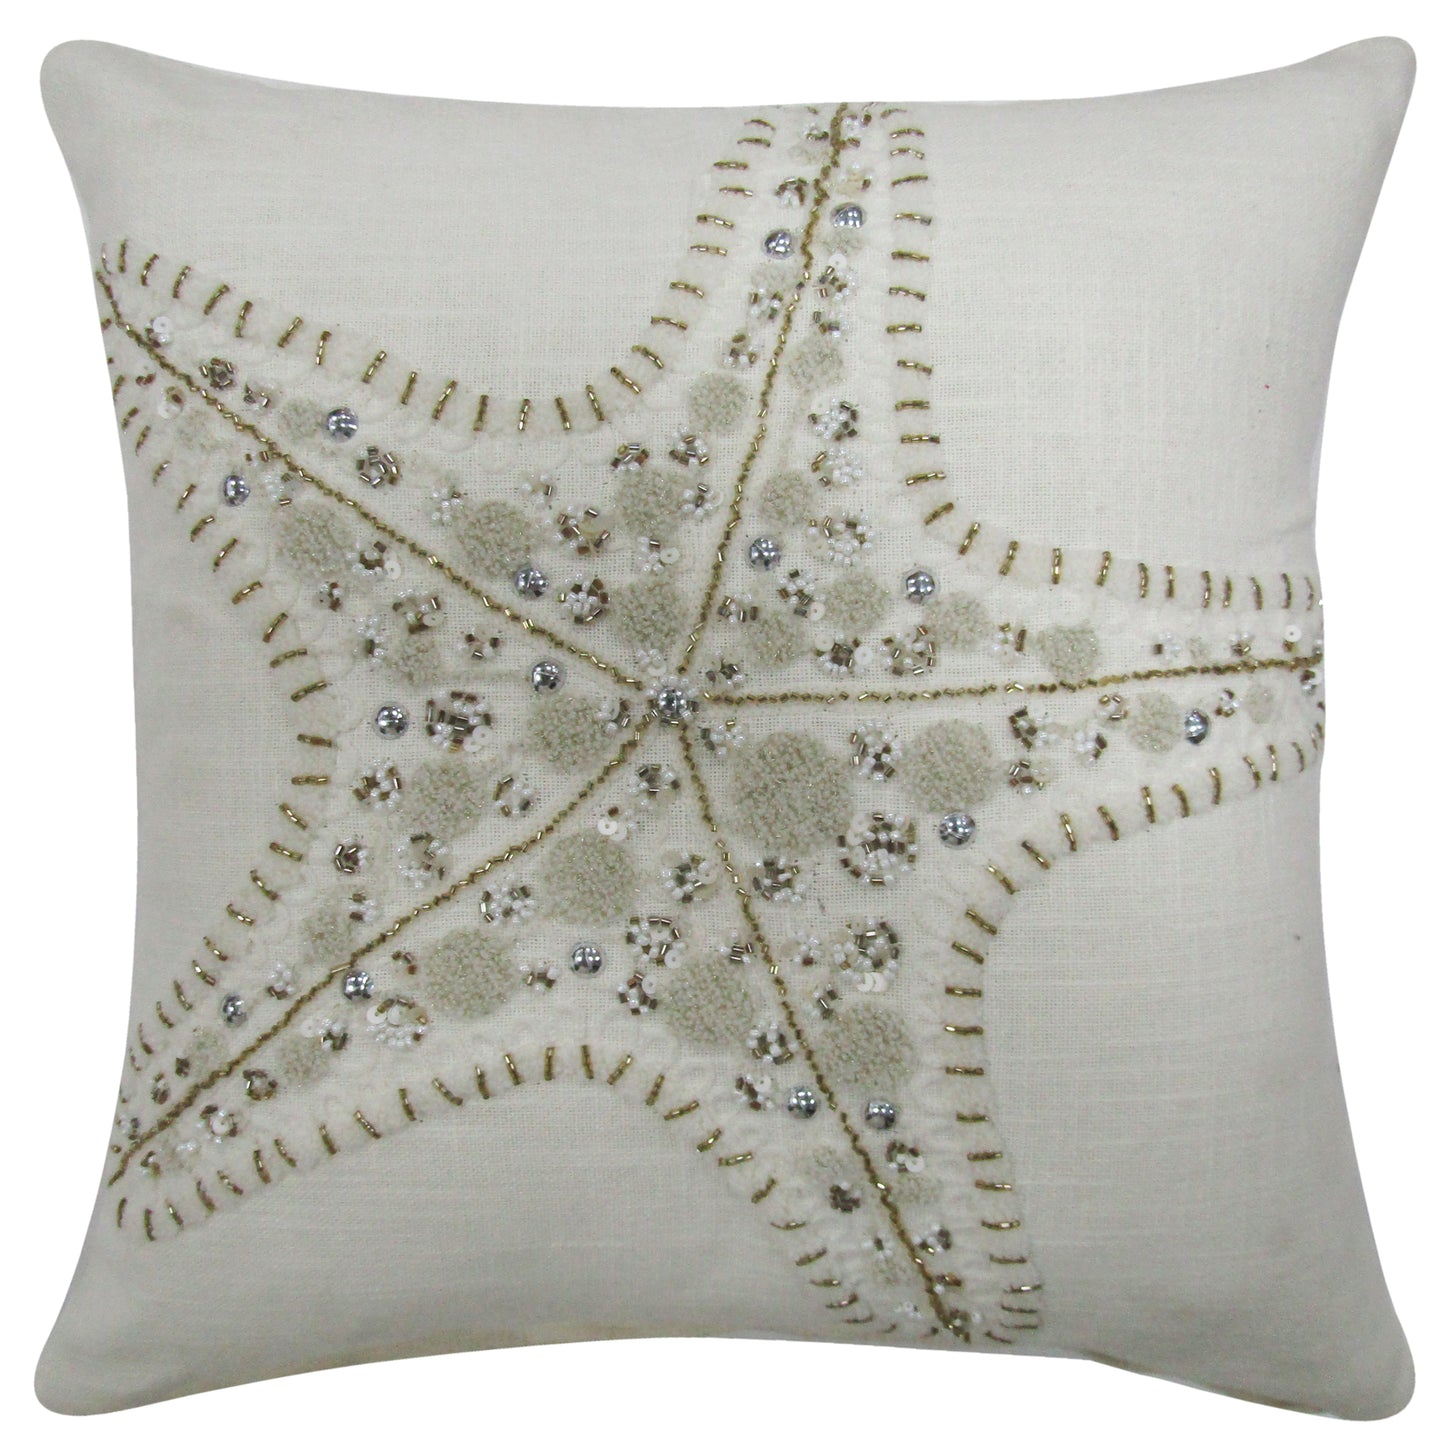 Nautical Starfish Embroidery Square Throw Pillow